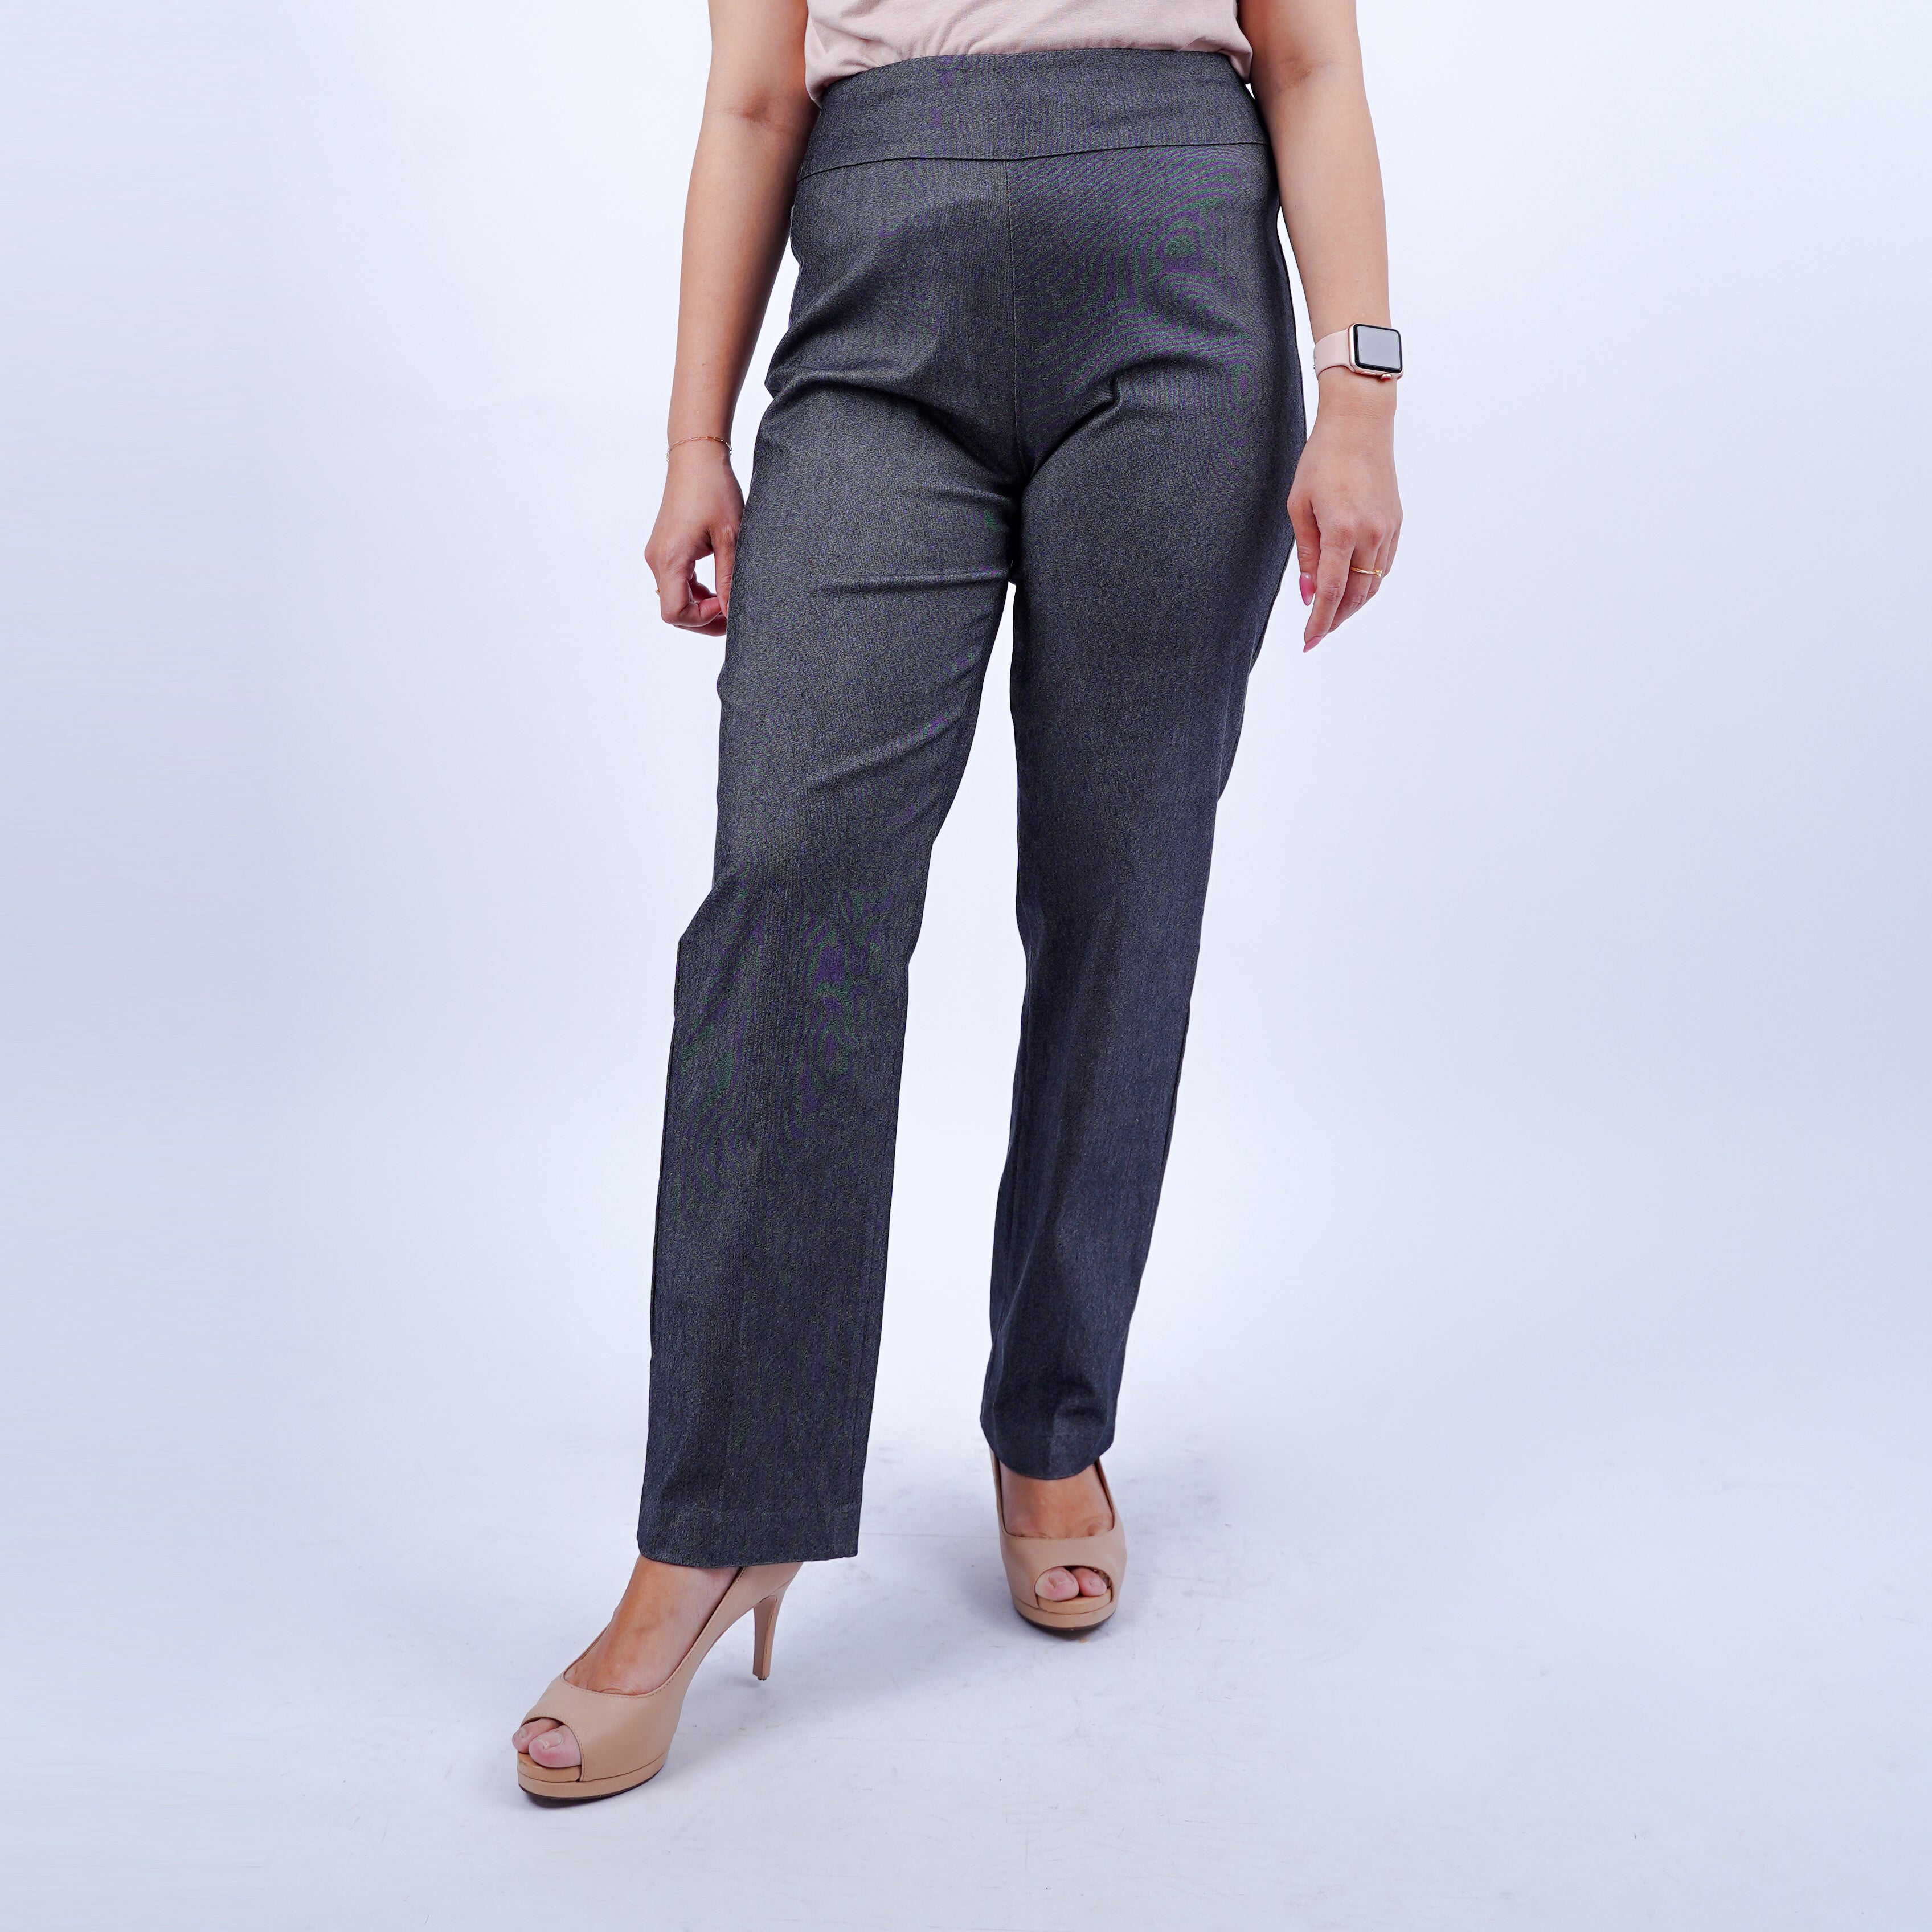 Celana Panjang Wanita - Office Straight Pants [CG-TAN 01]